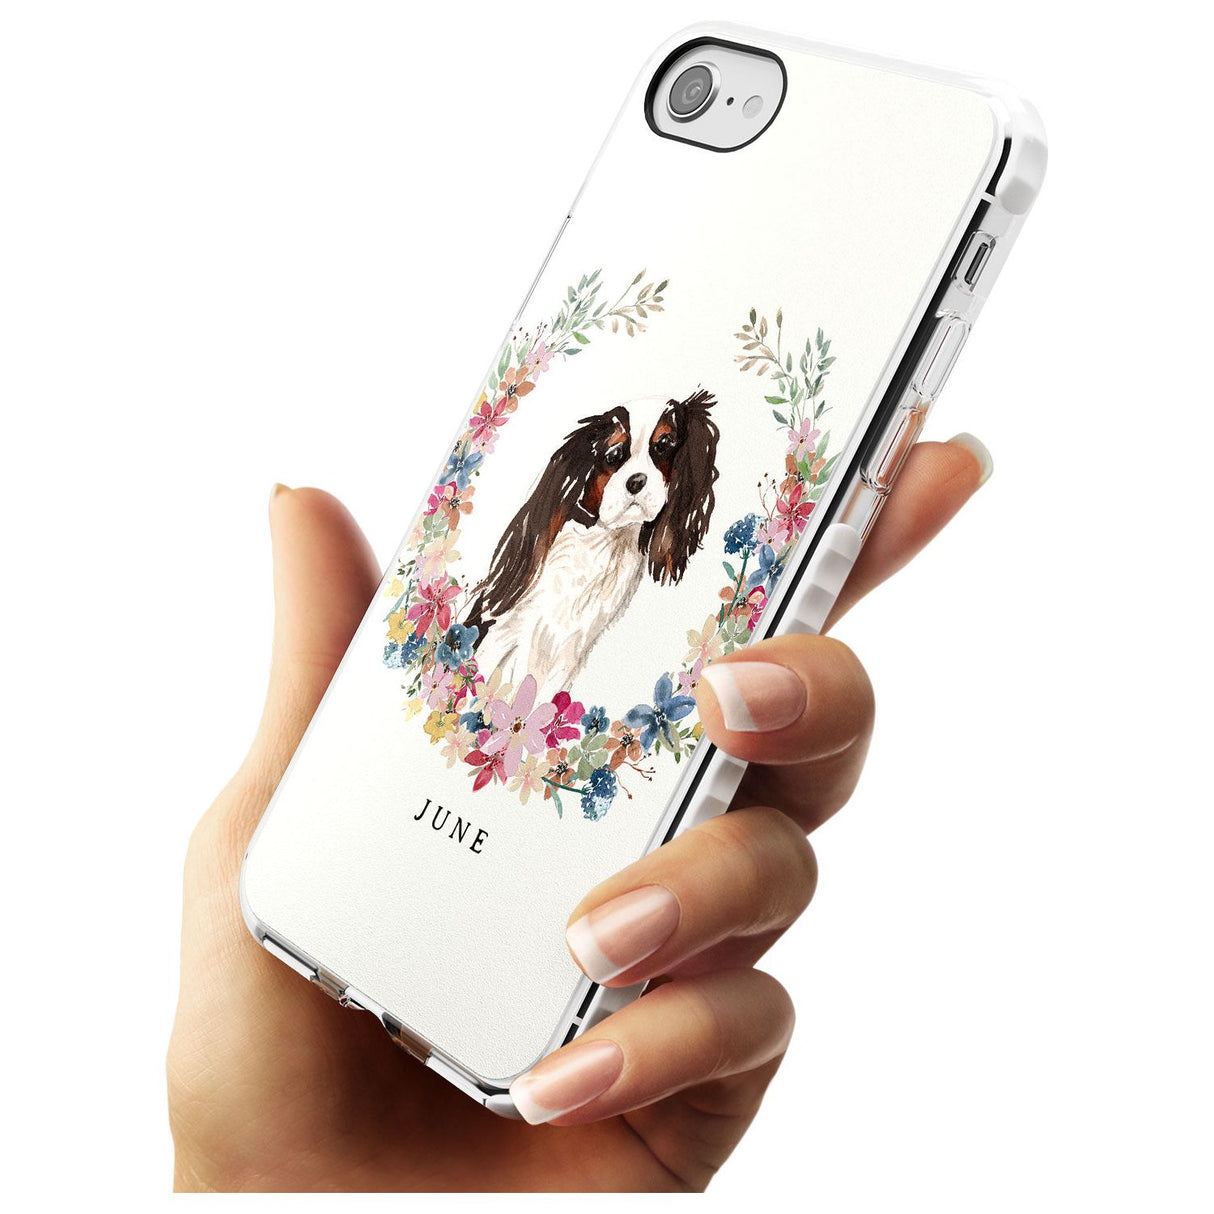 Tri Coloured King Charles Watercolour Dog Portrait Impact Phone Case for iPhone SE 8 7 Plus